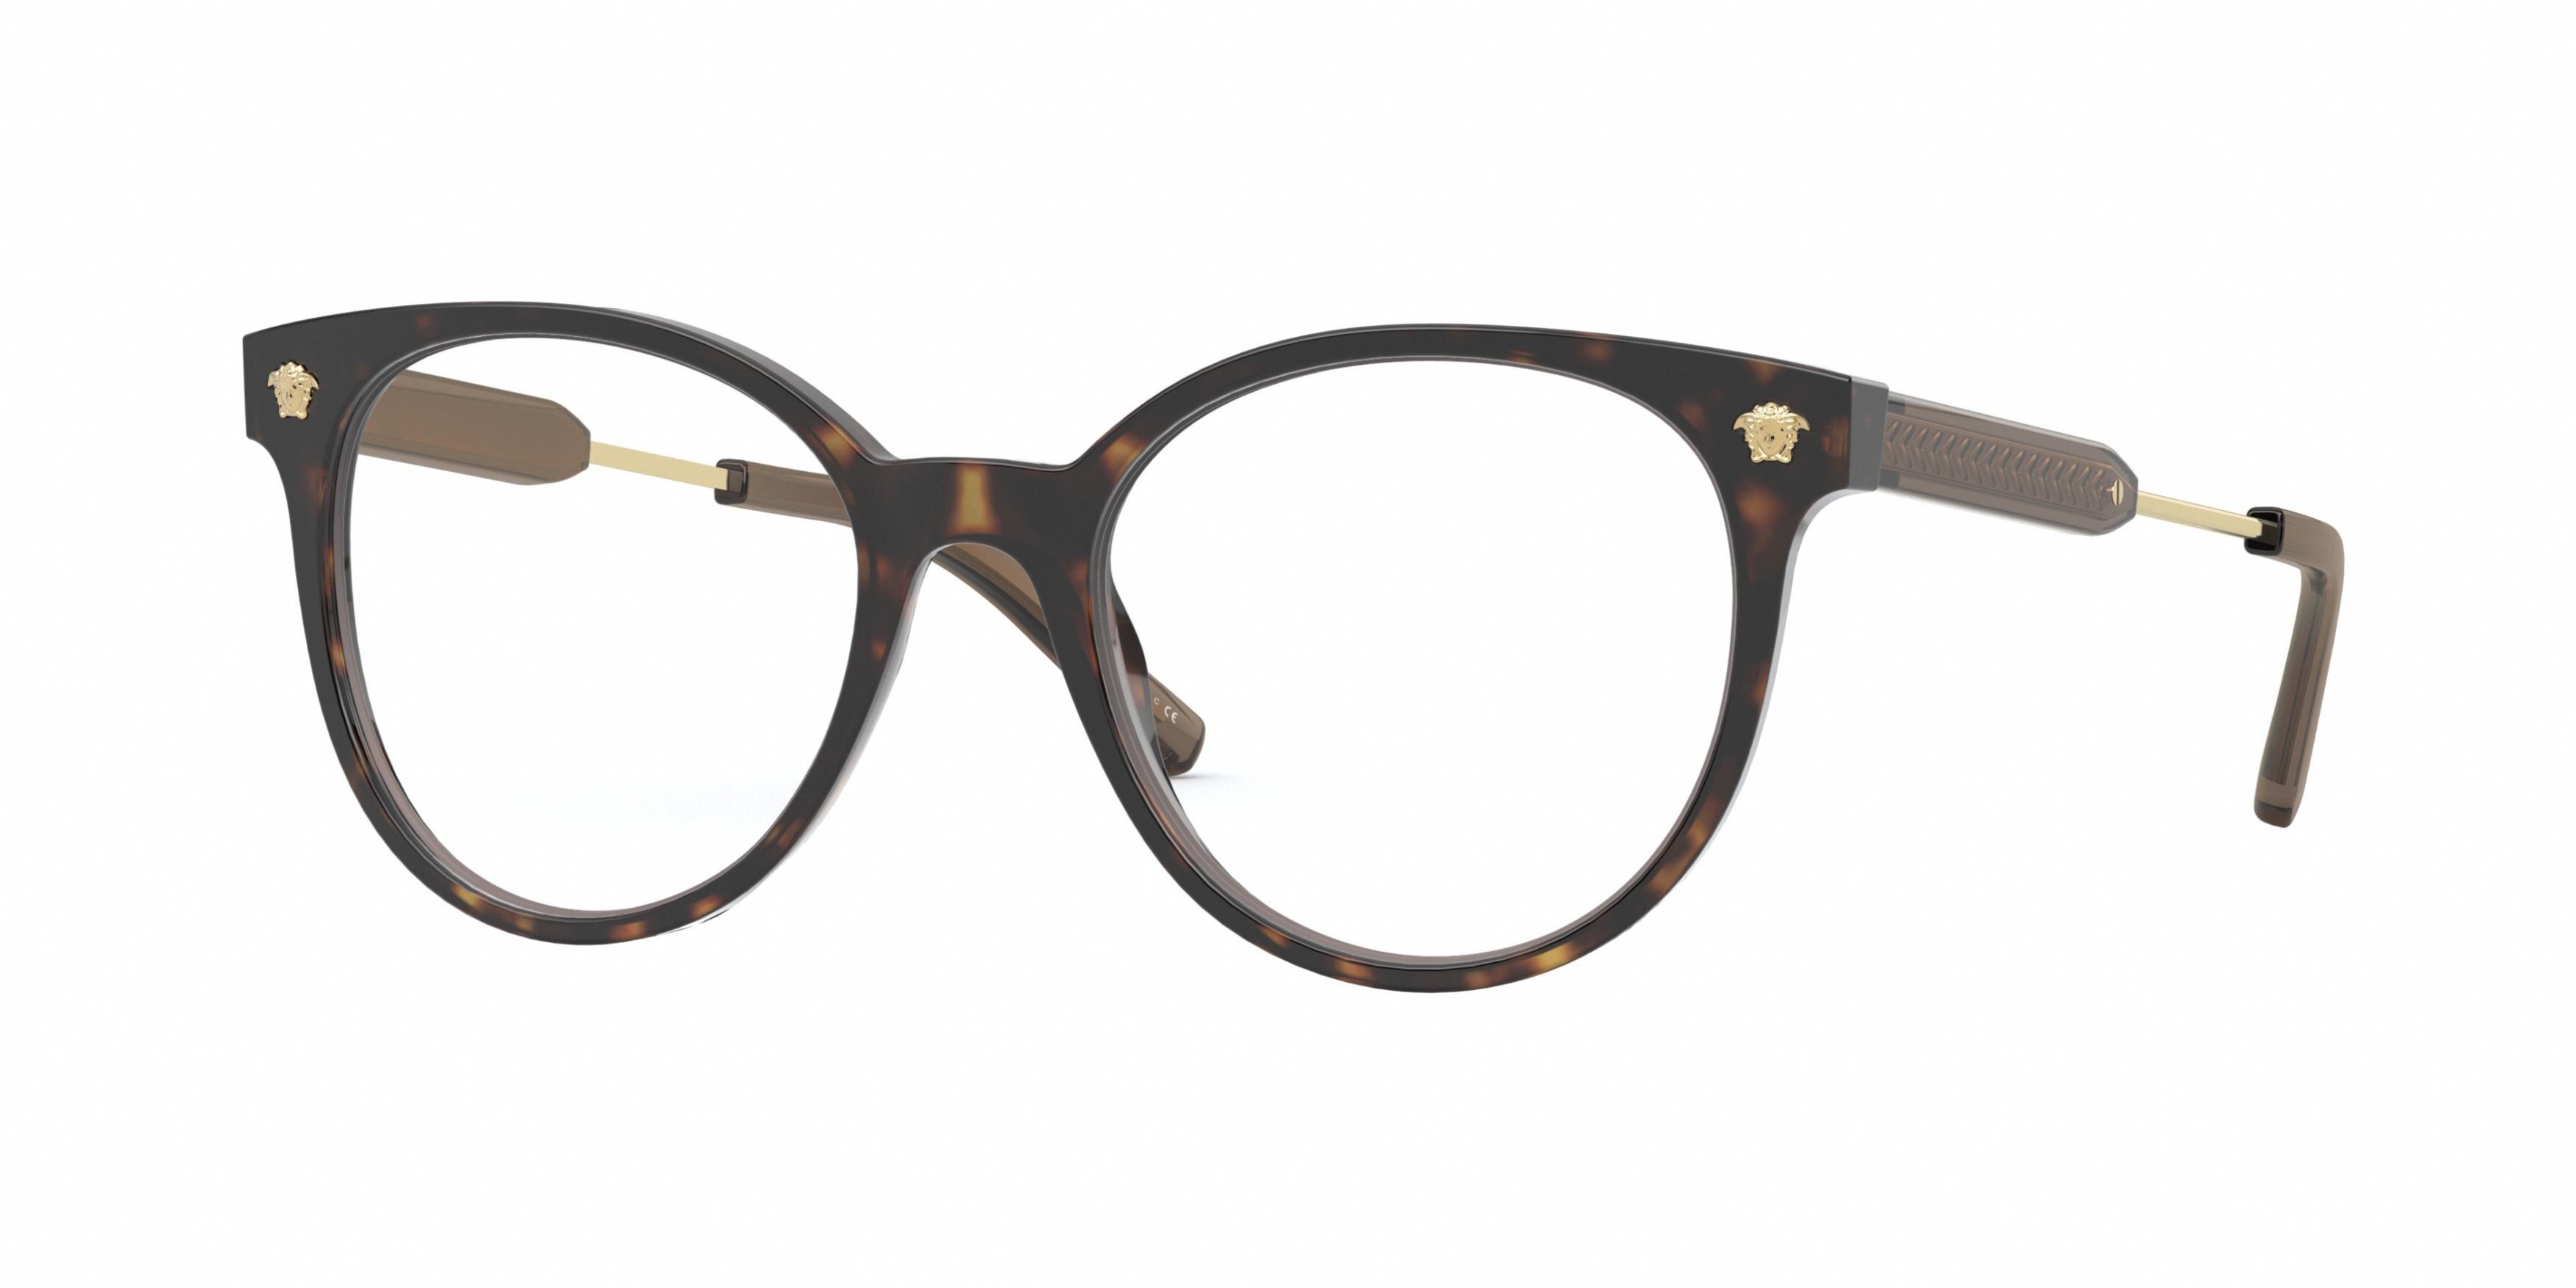 Buy Versace Eyeglasses directly from OpticsFast.com